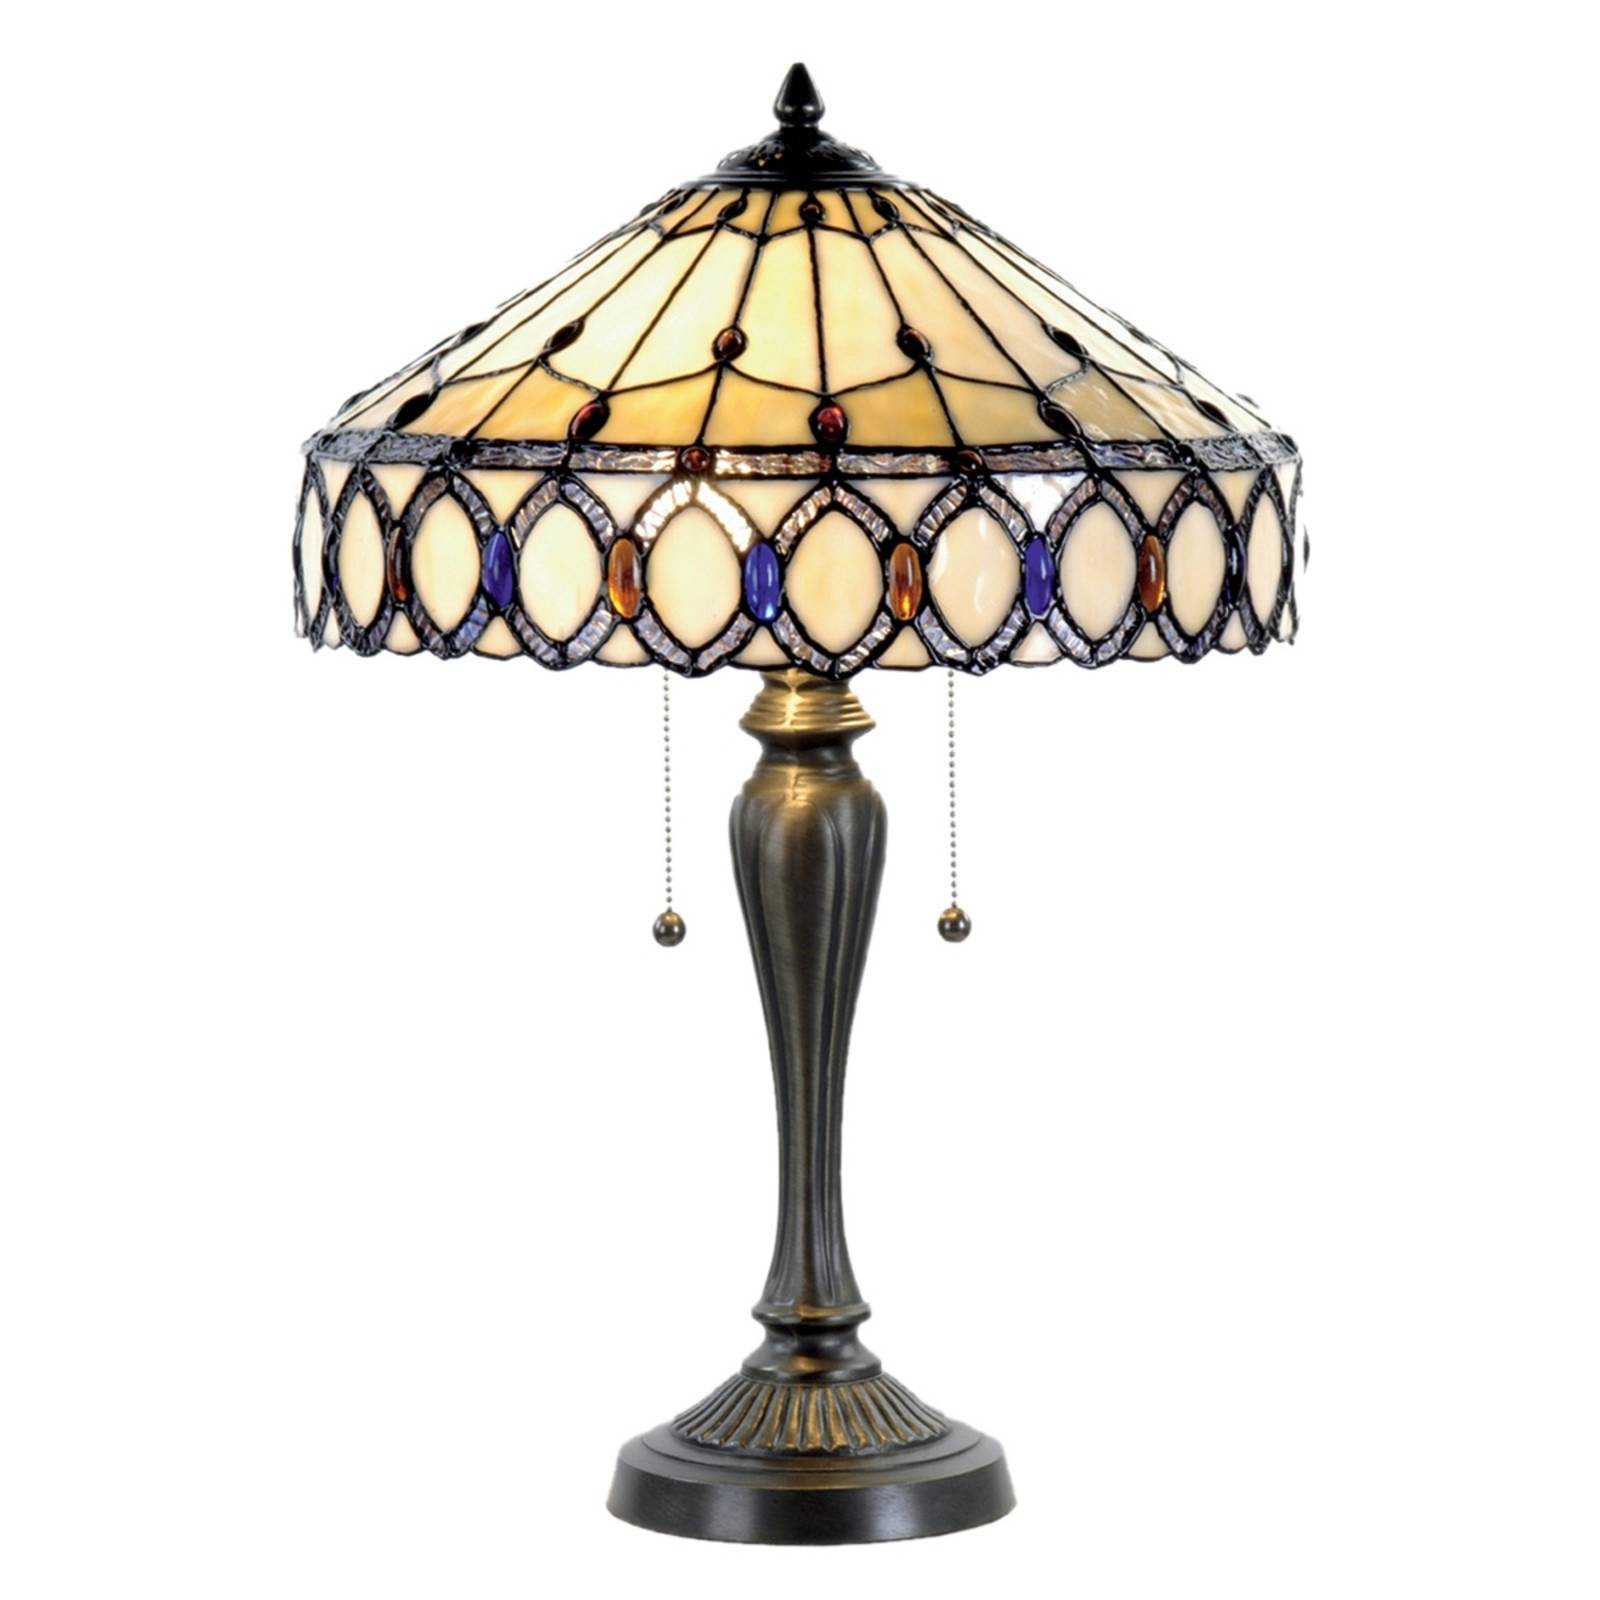 Aantrekkelijke tafellamp Fiera in Tiffany-stijl